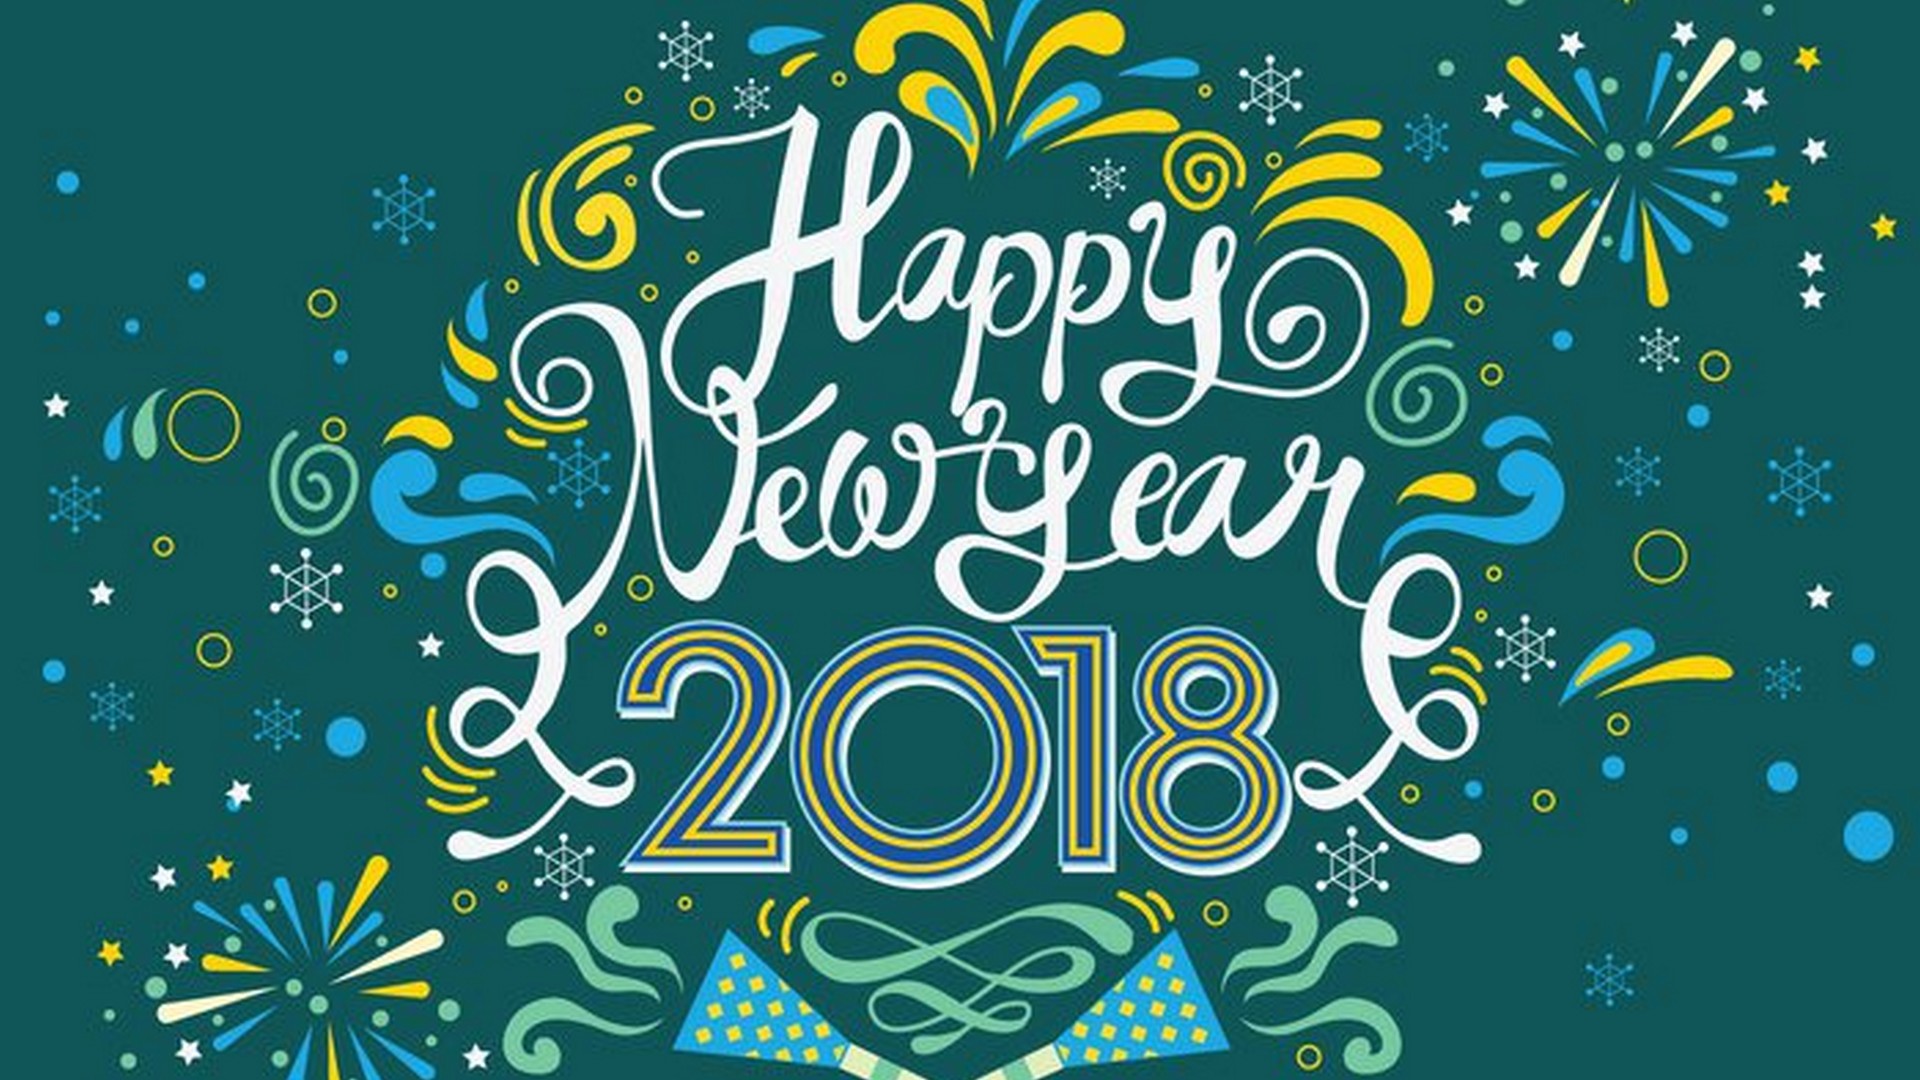 Happy New Year 2018 Wallpaper 1920x1080